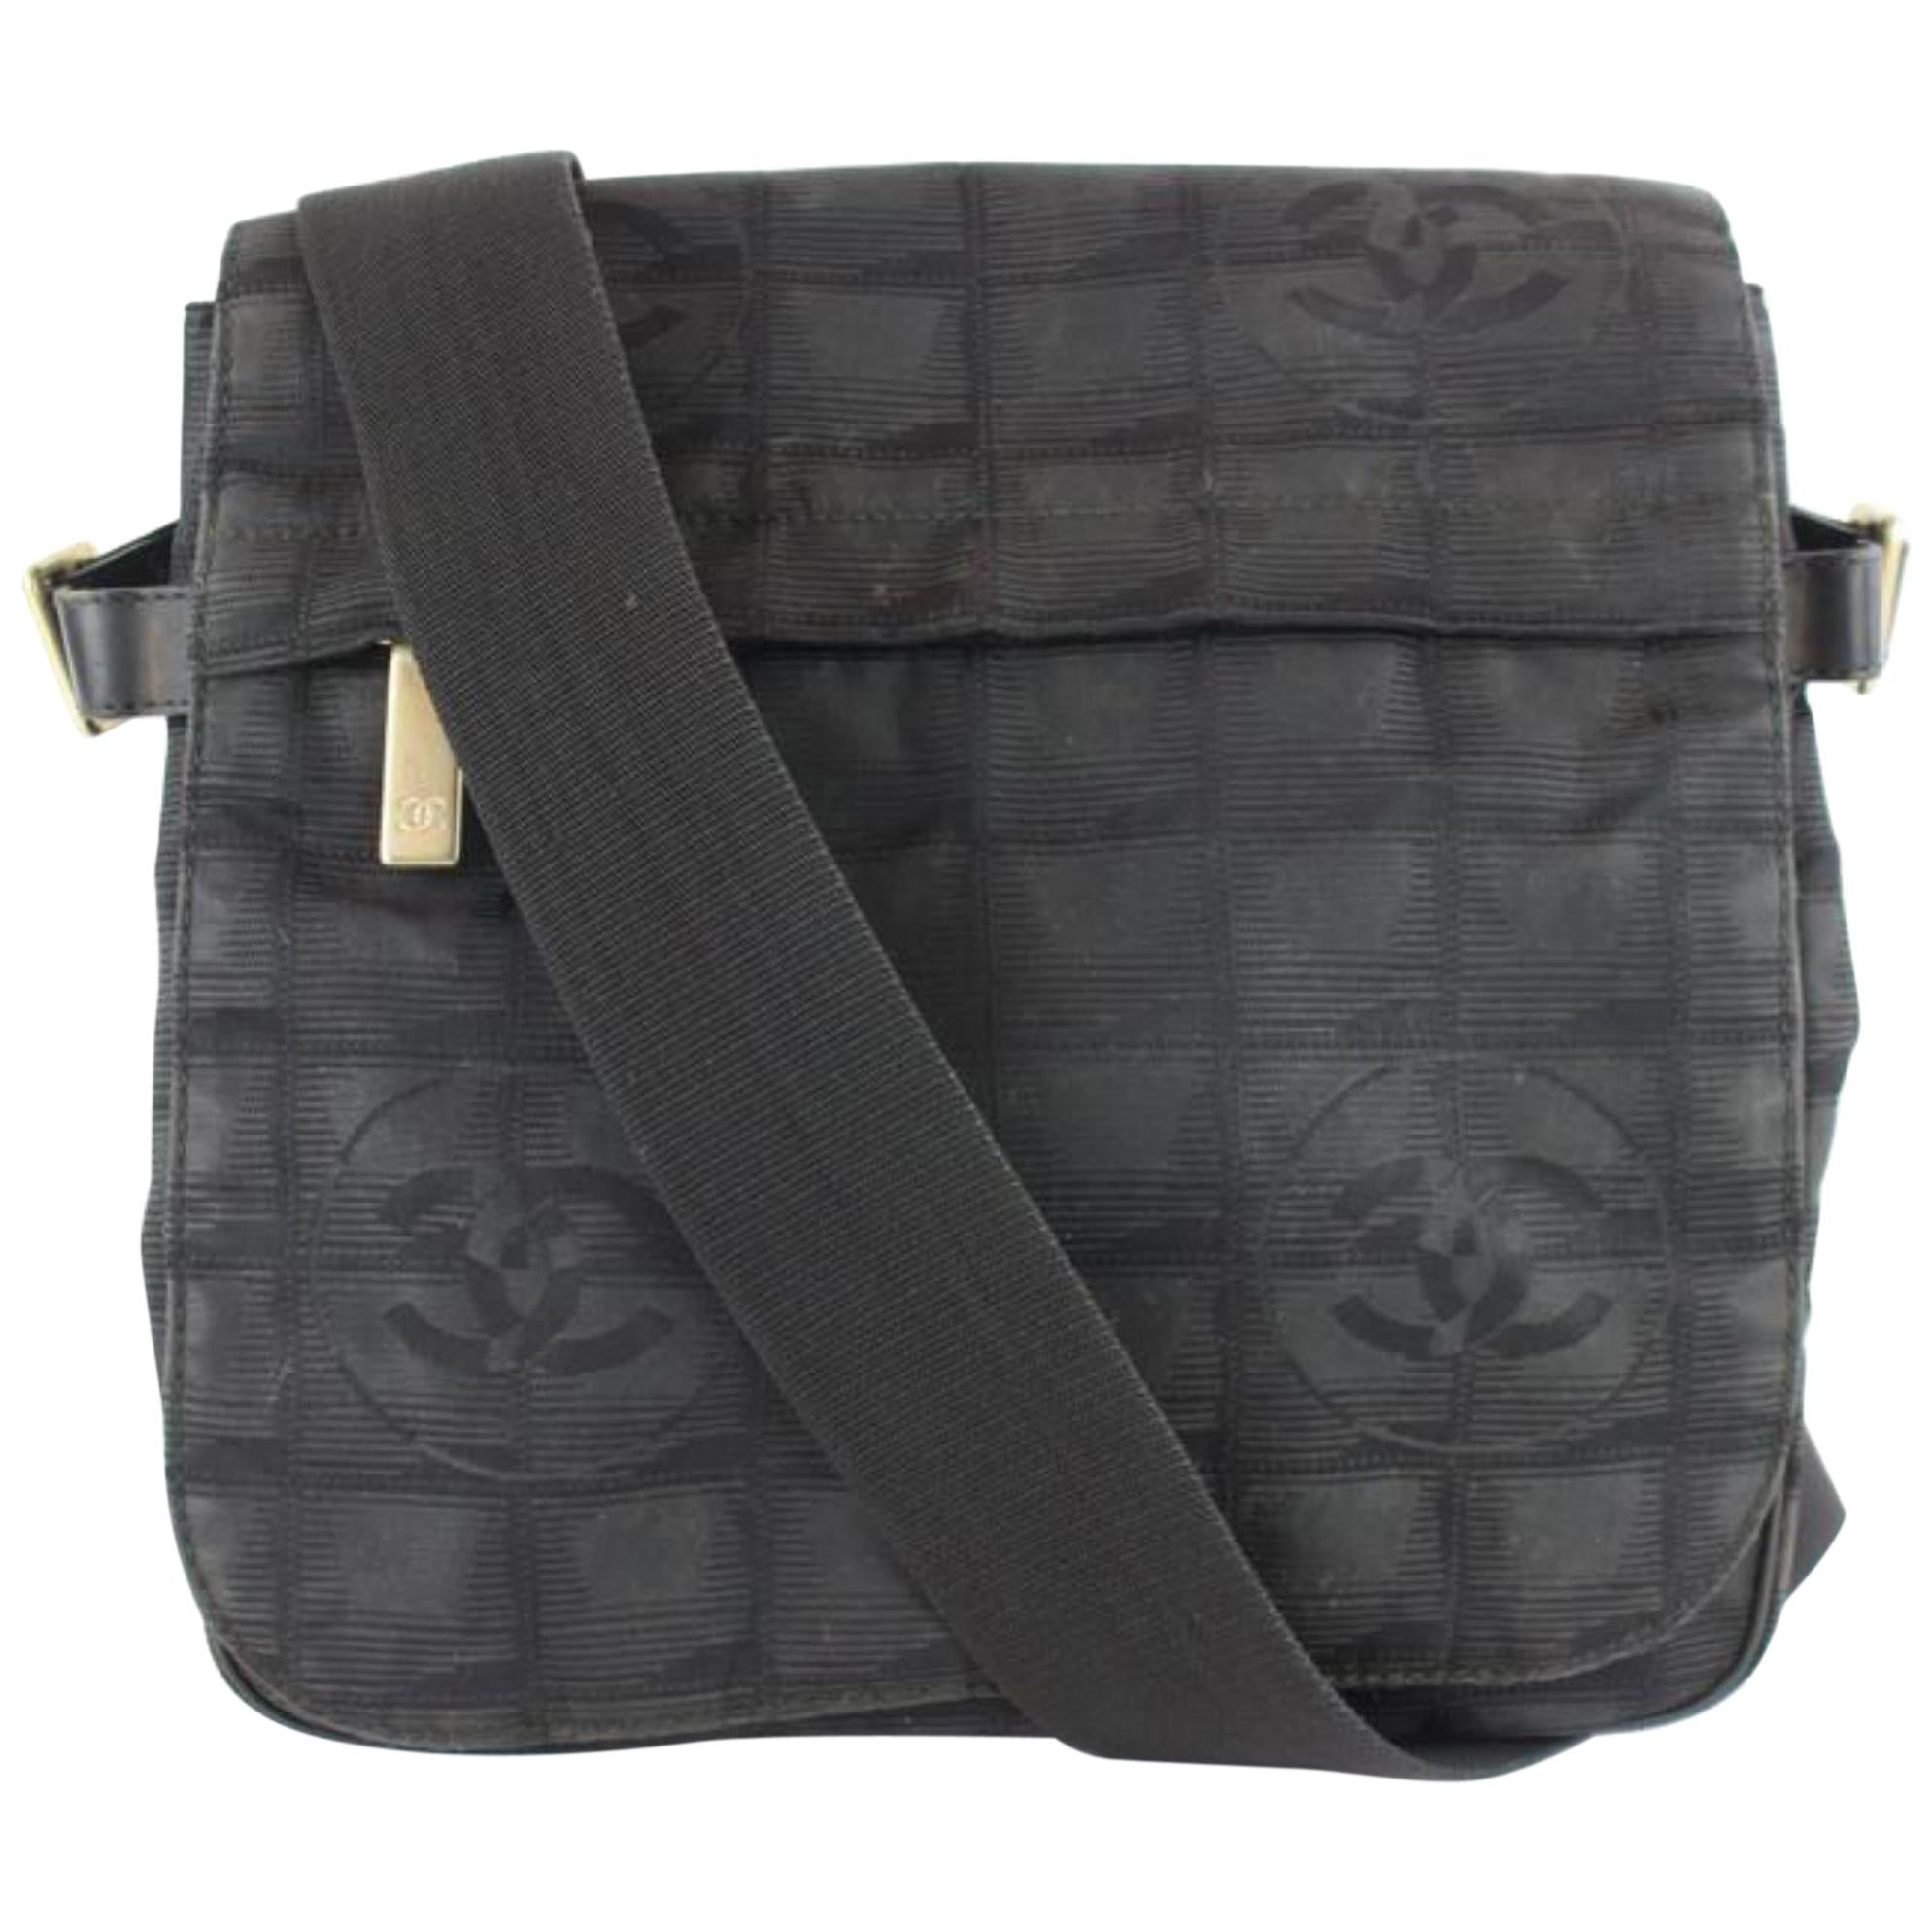 Chanel Messenger Quilted New Line Travel 228870 Black Nylon Cross Body Bag For Sale